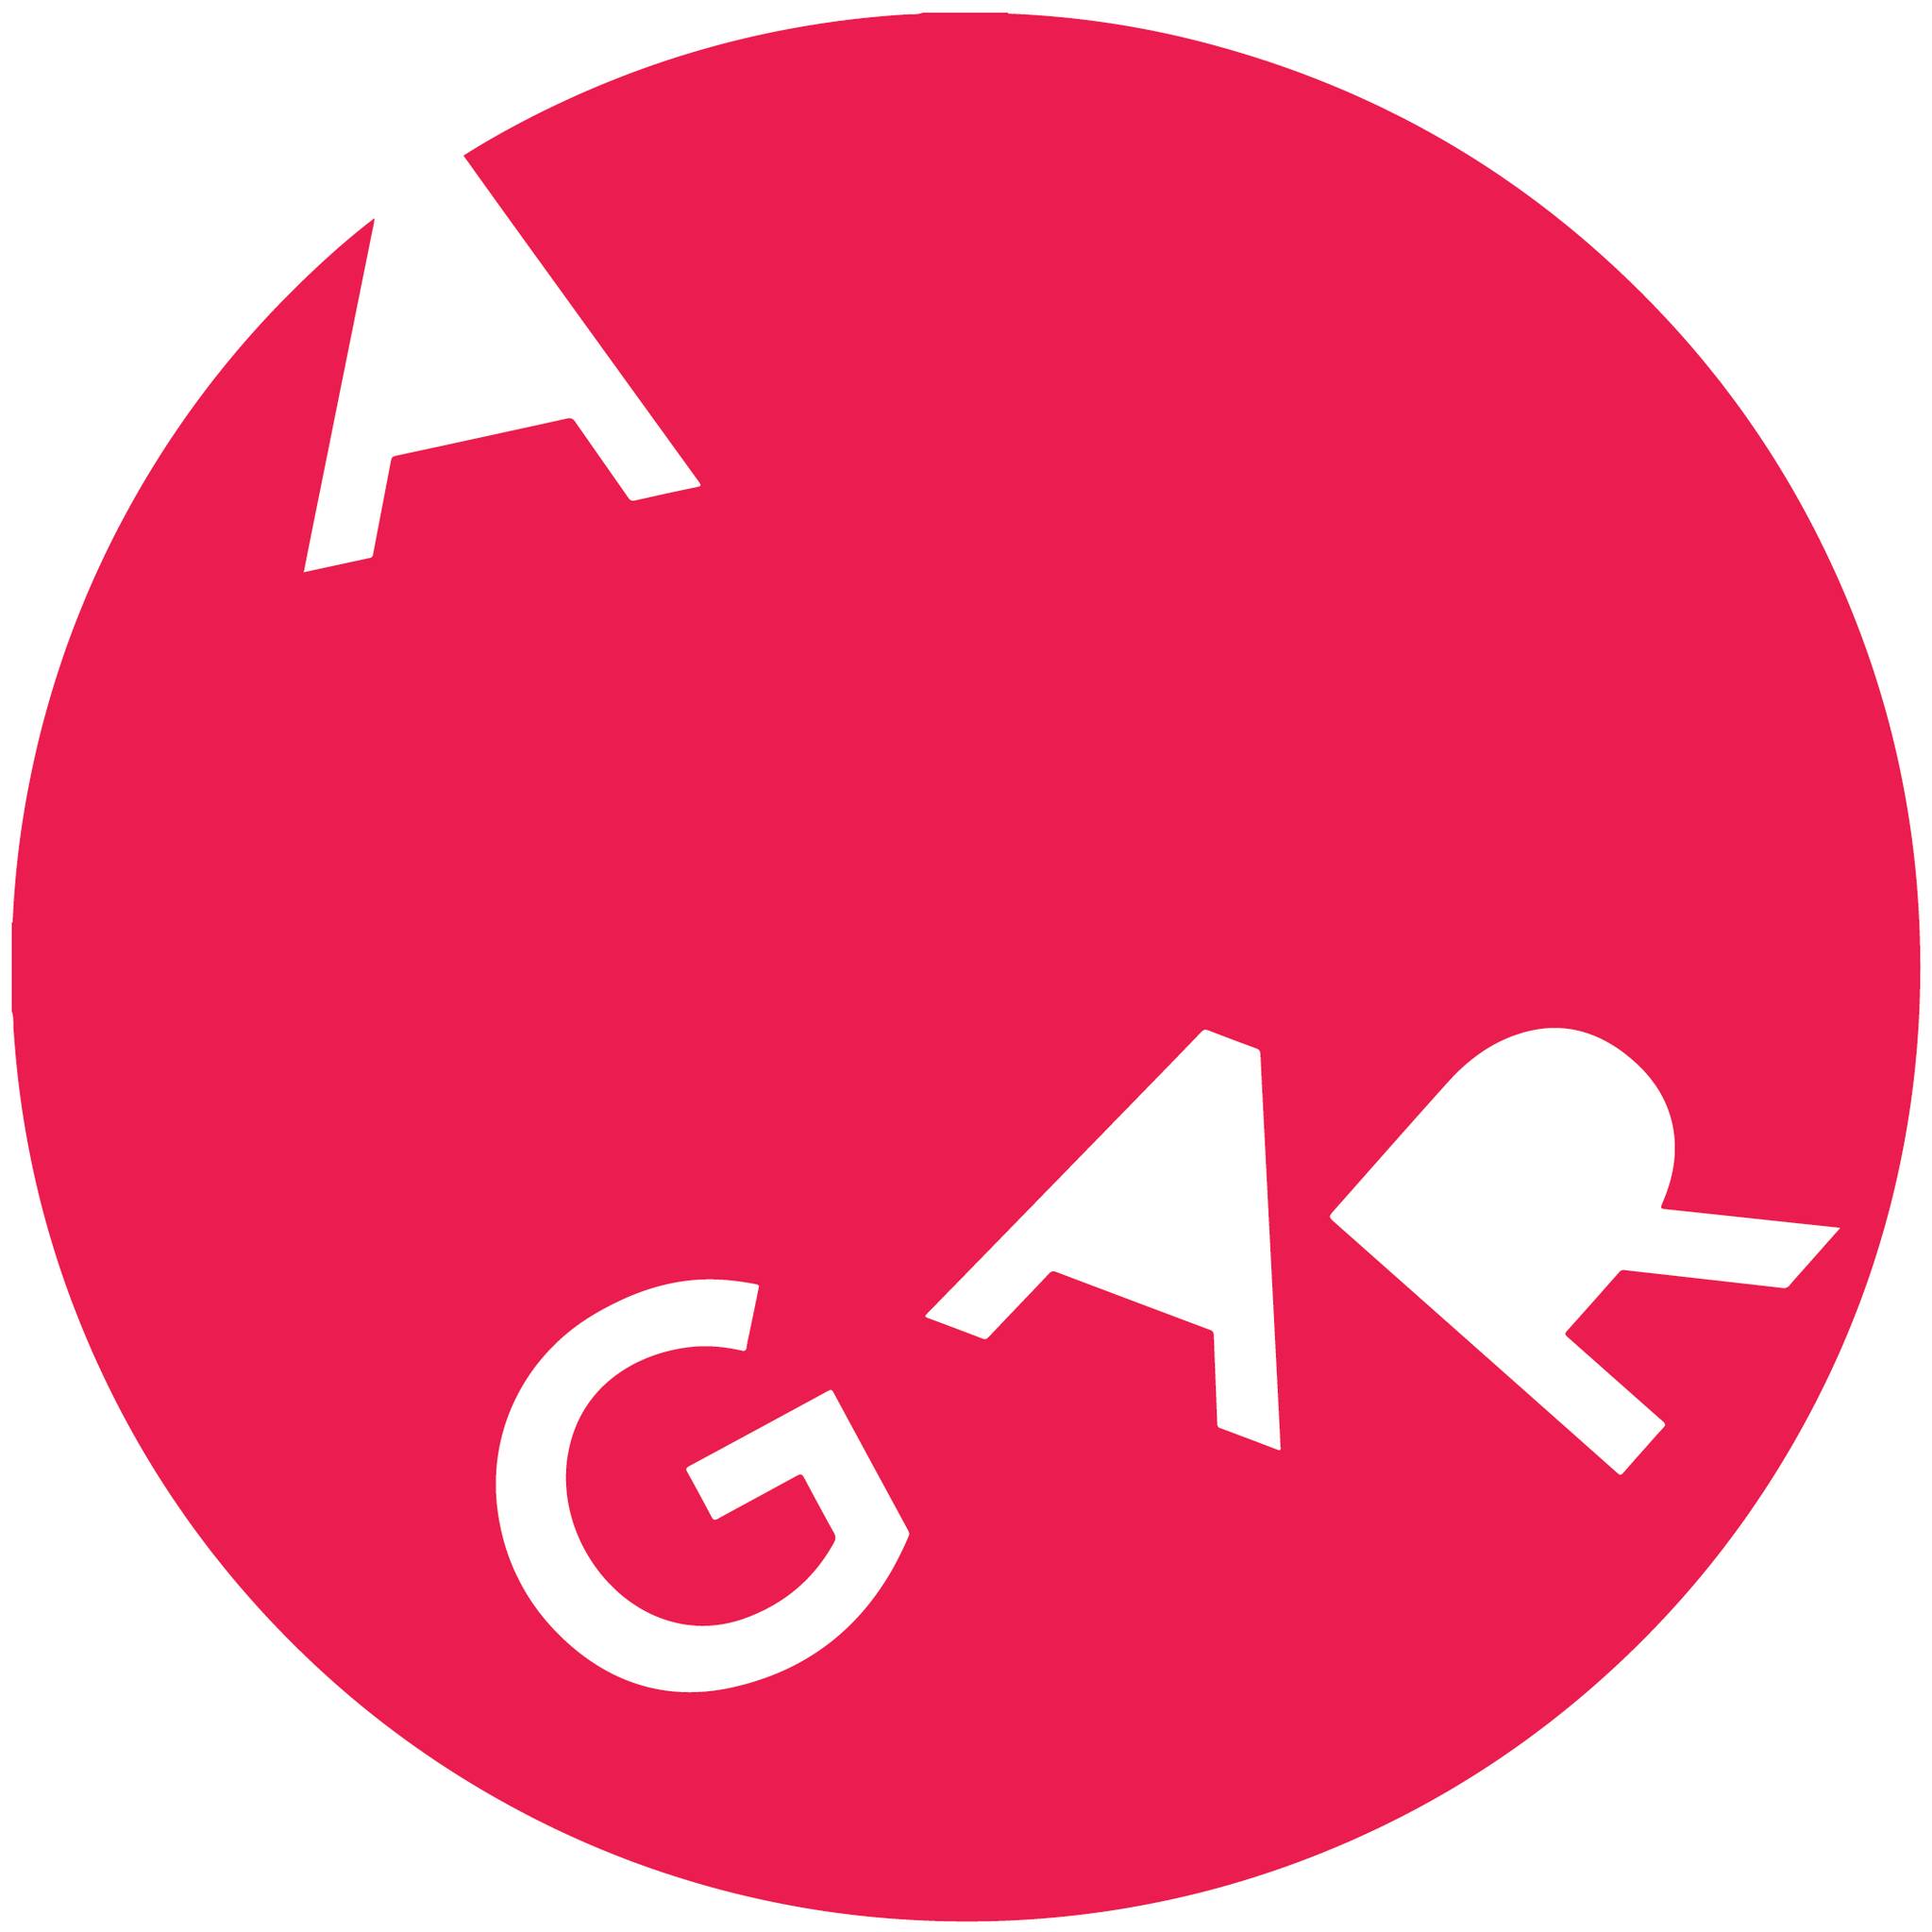 AGAR Logo